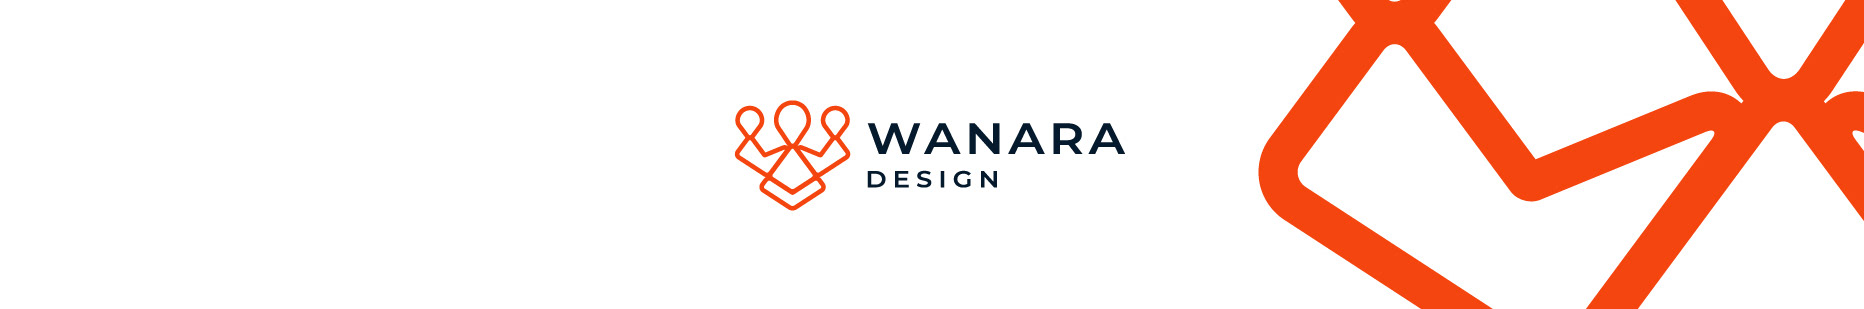 wanara design